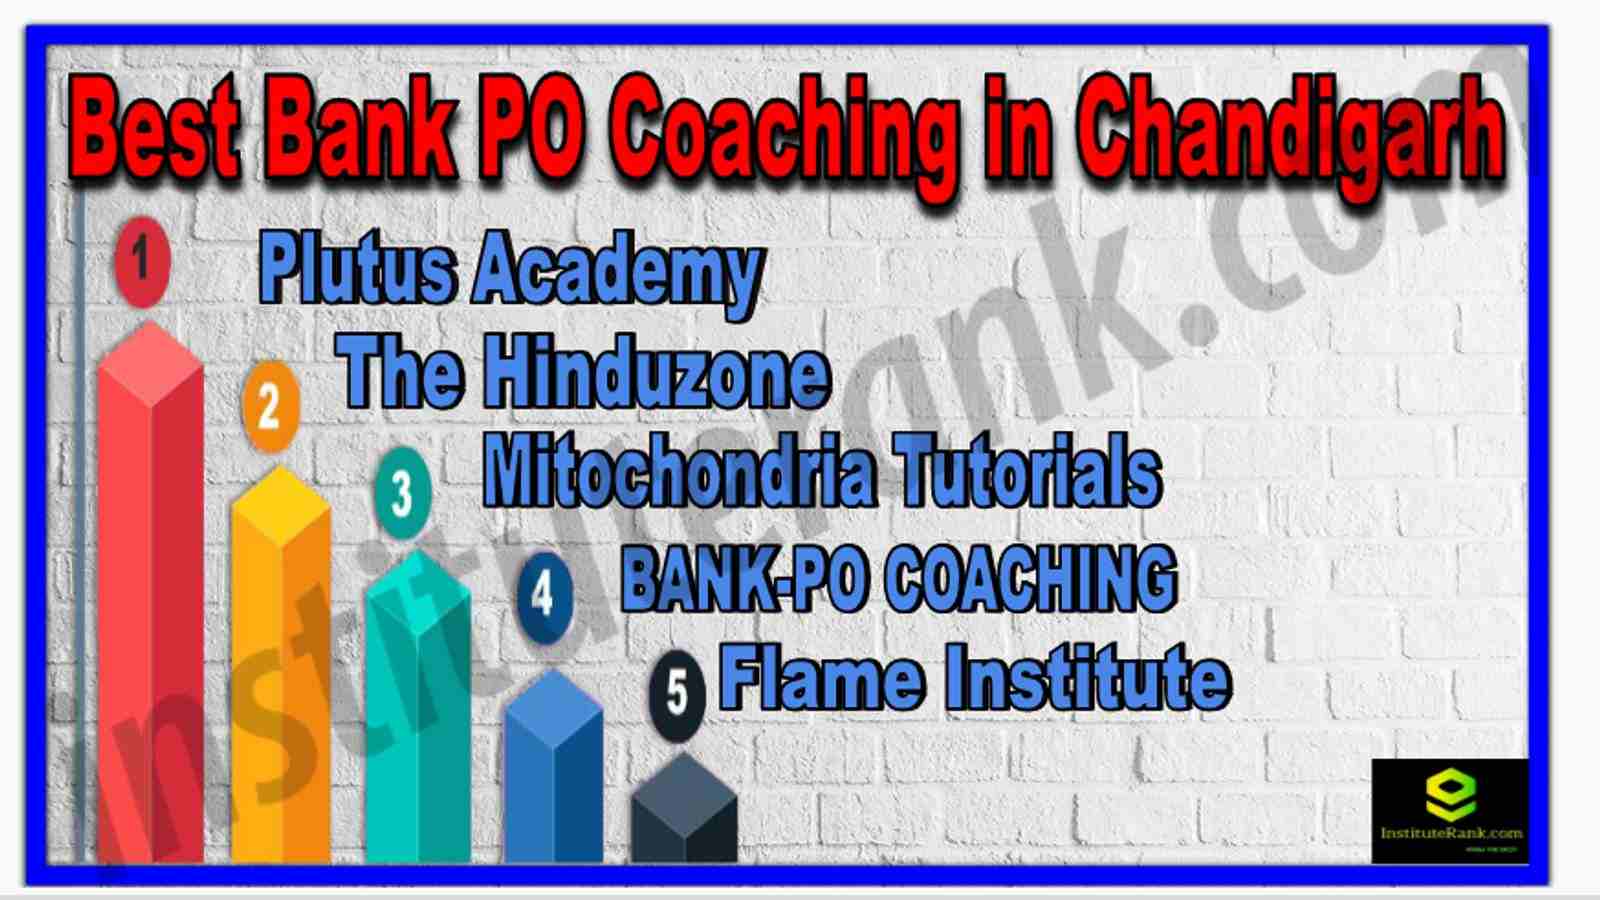 Best Bank PO Coaching in Chandigarh